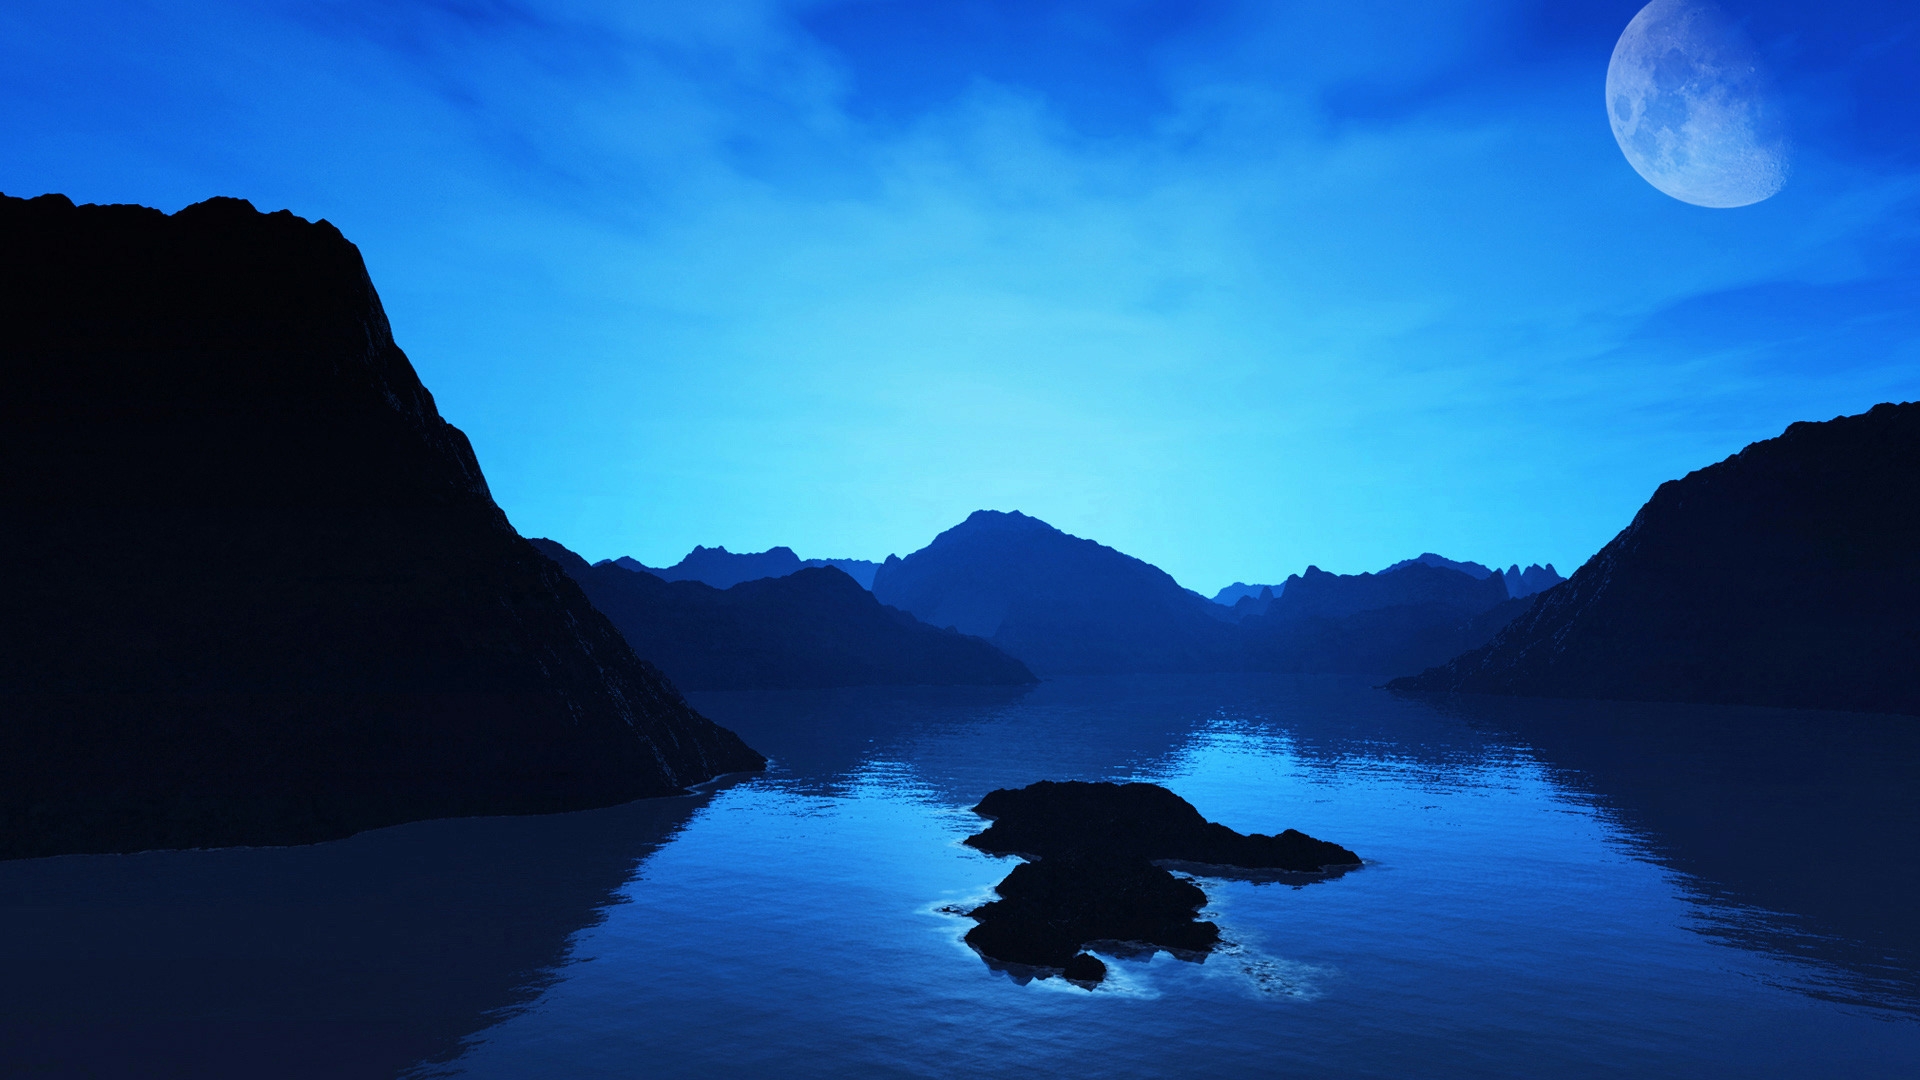 Amazing Blue Landscape for 1920 x 1080 HDTV 1080p resolution